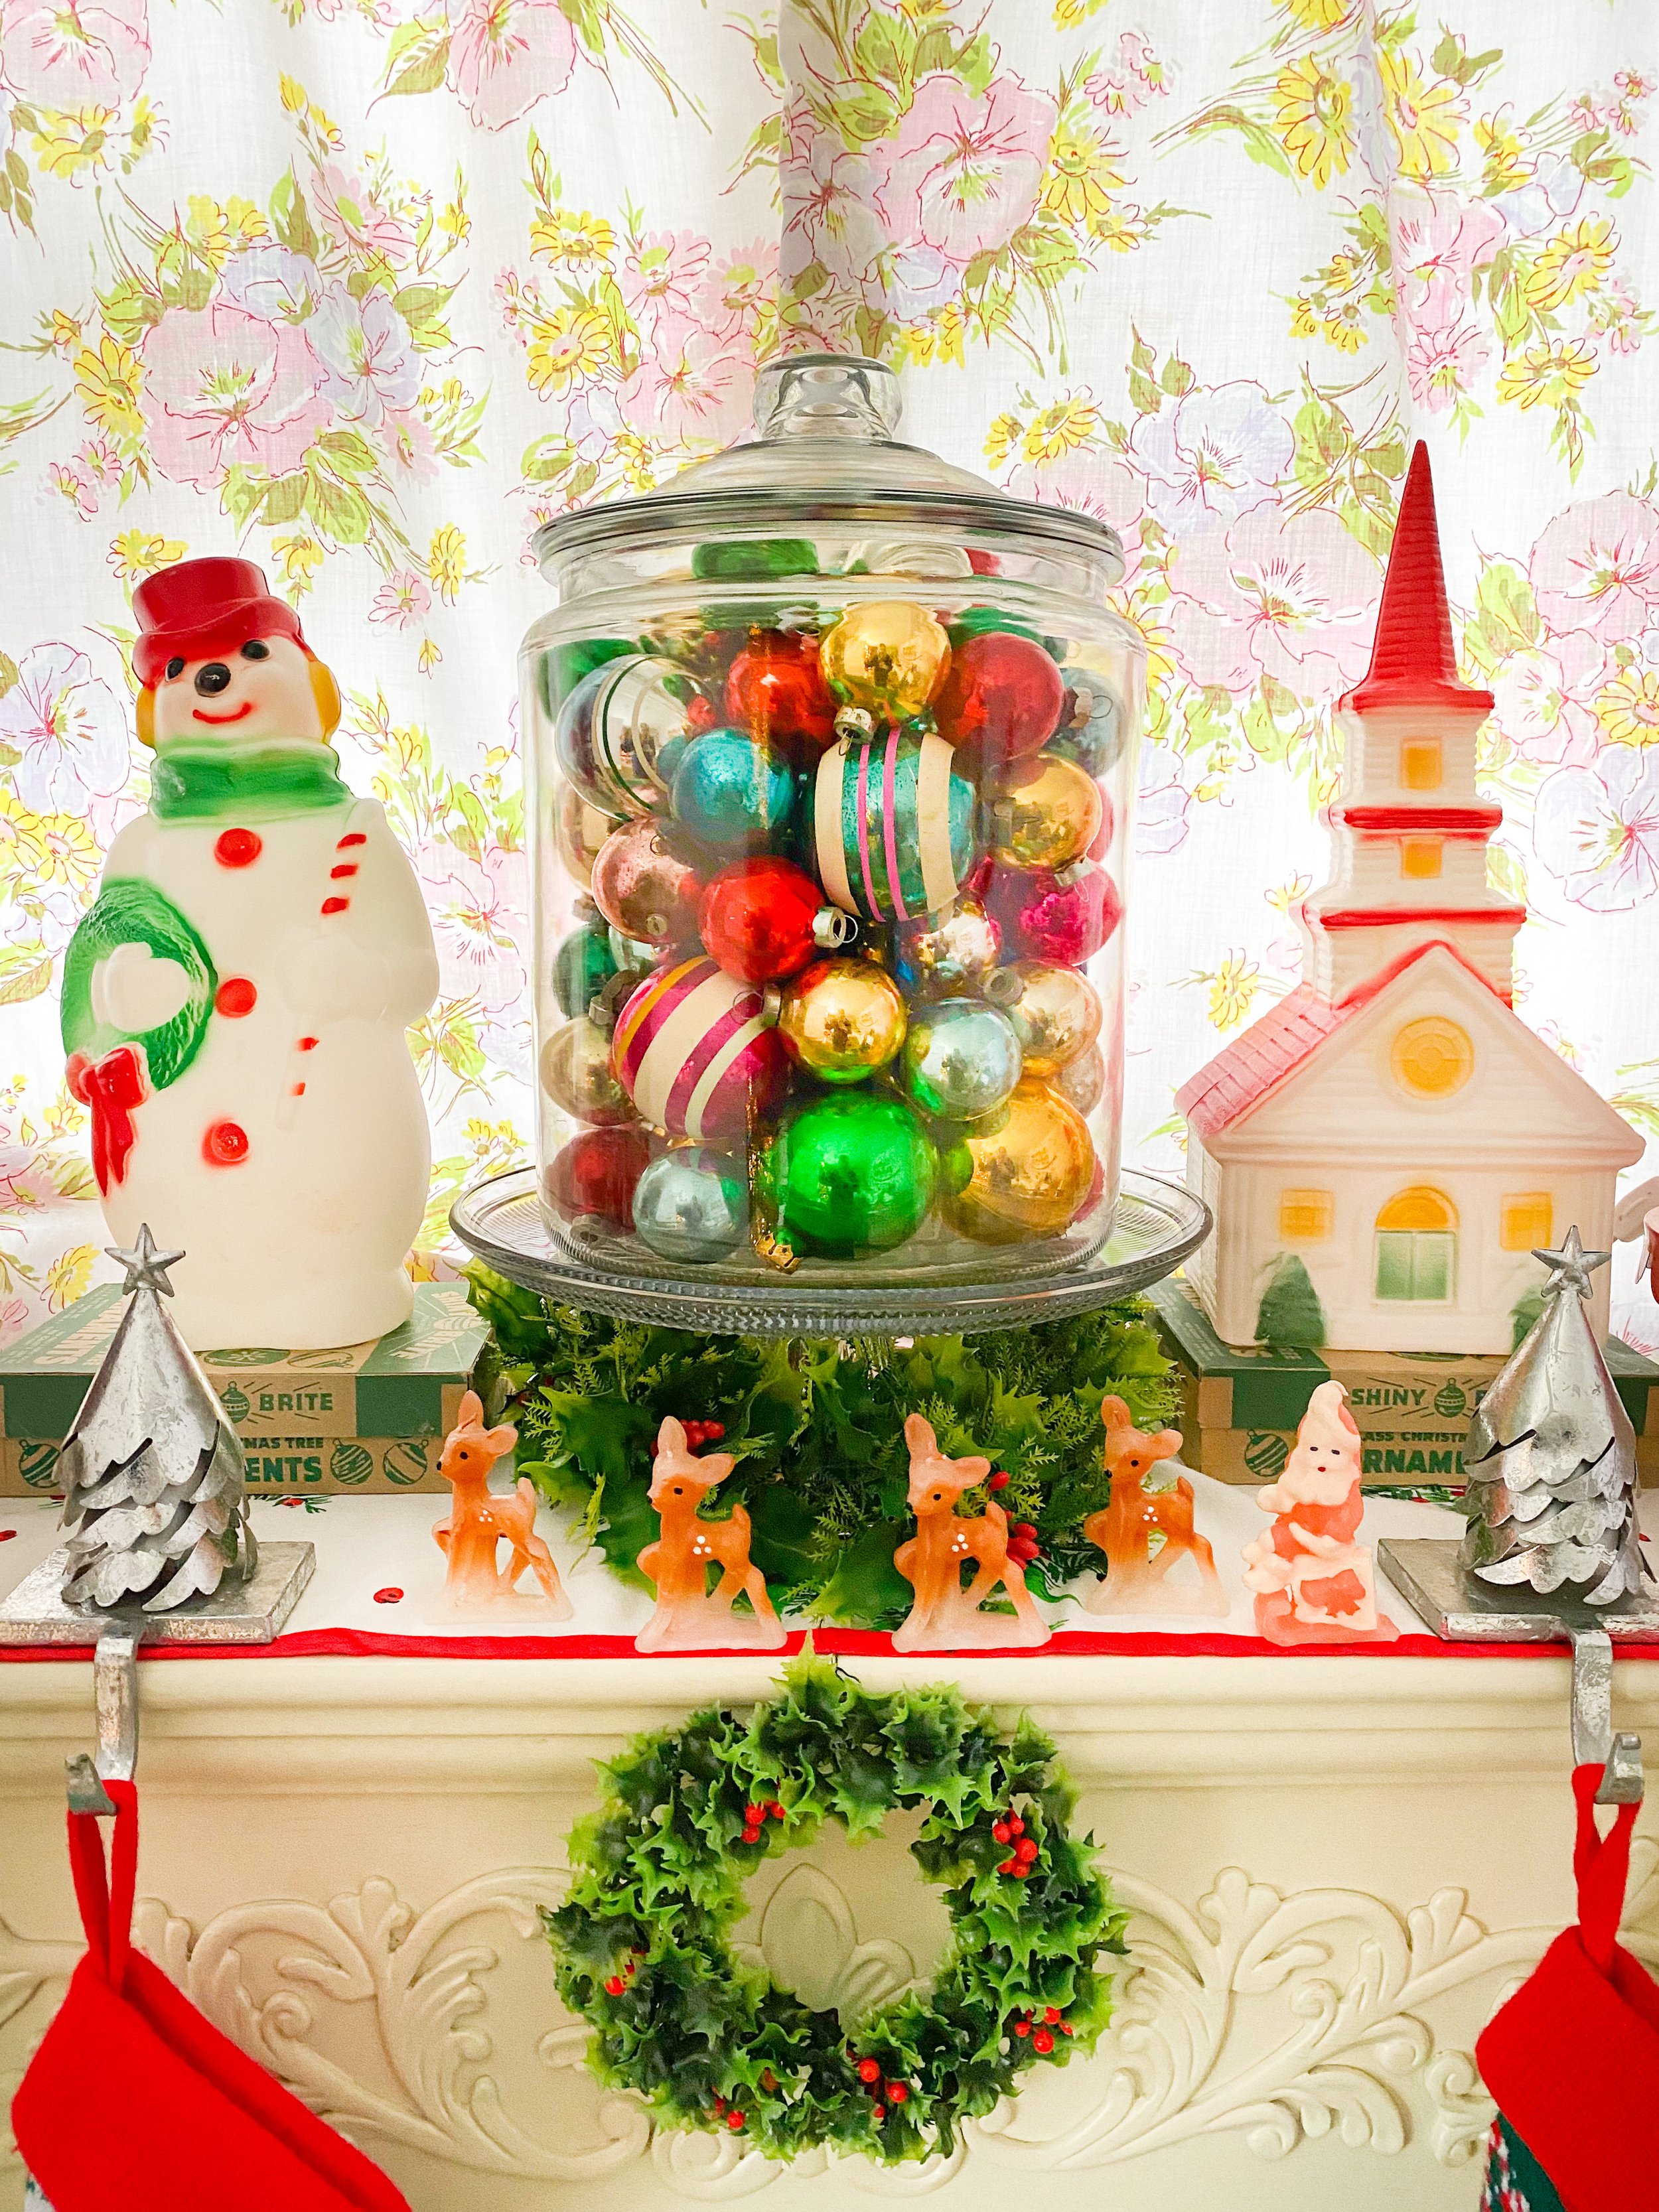 vintage beaded ornament kits - Google Search  Beaded christmas ornaments,  Victorian christmas ornaments, Christmas ornaments